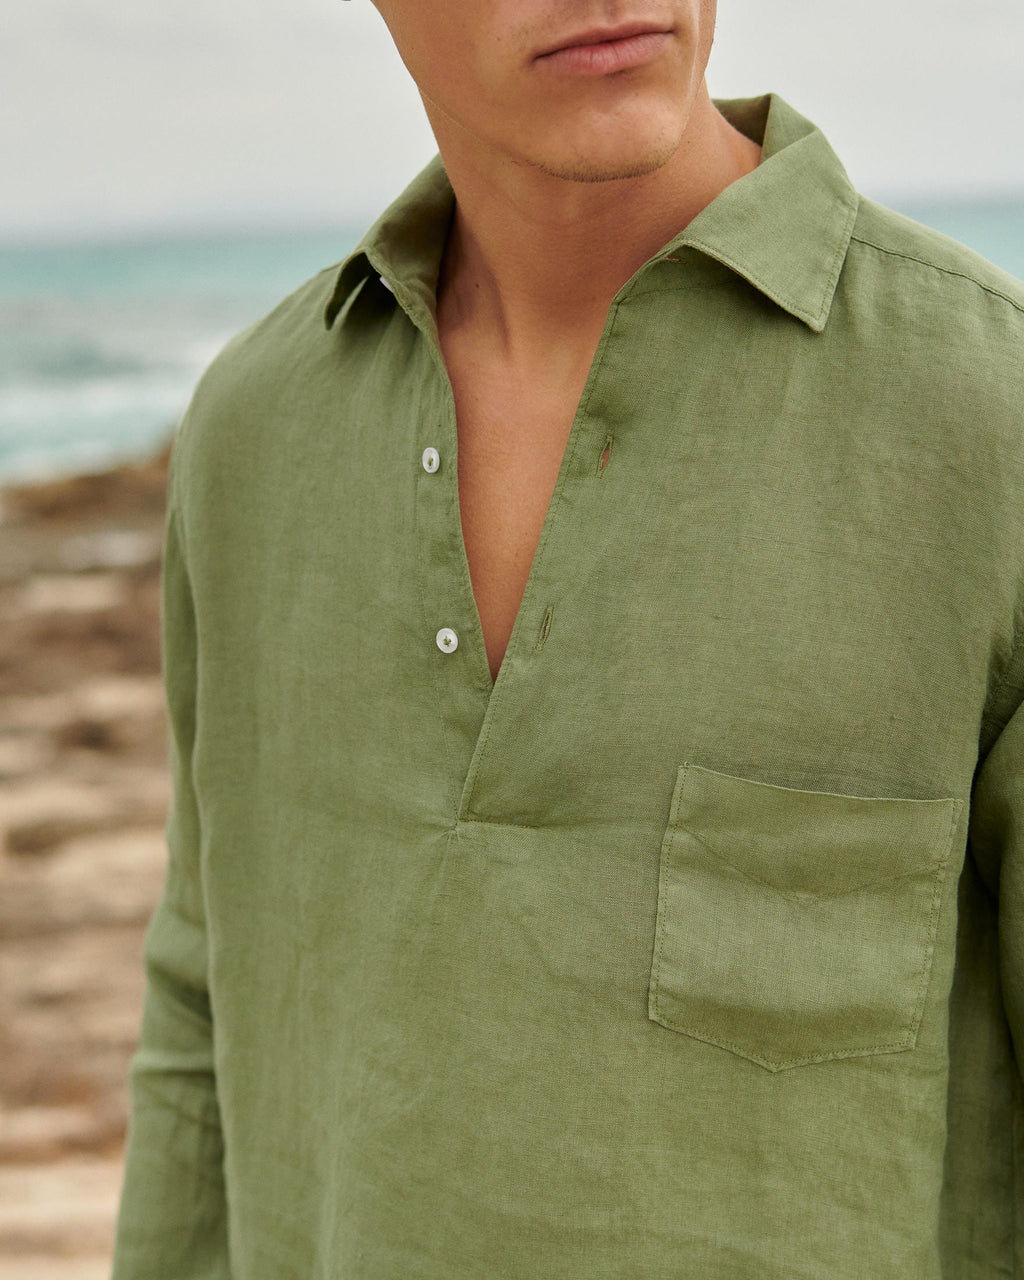 Nassau Polo Shirt - Washed Linen - Military Green